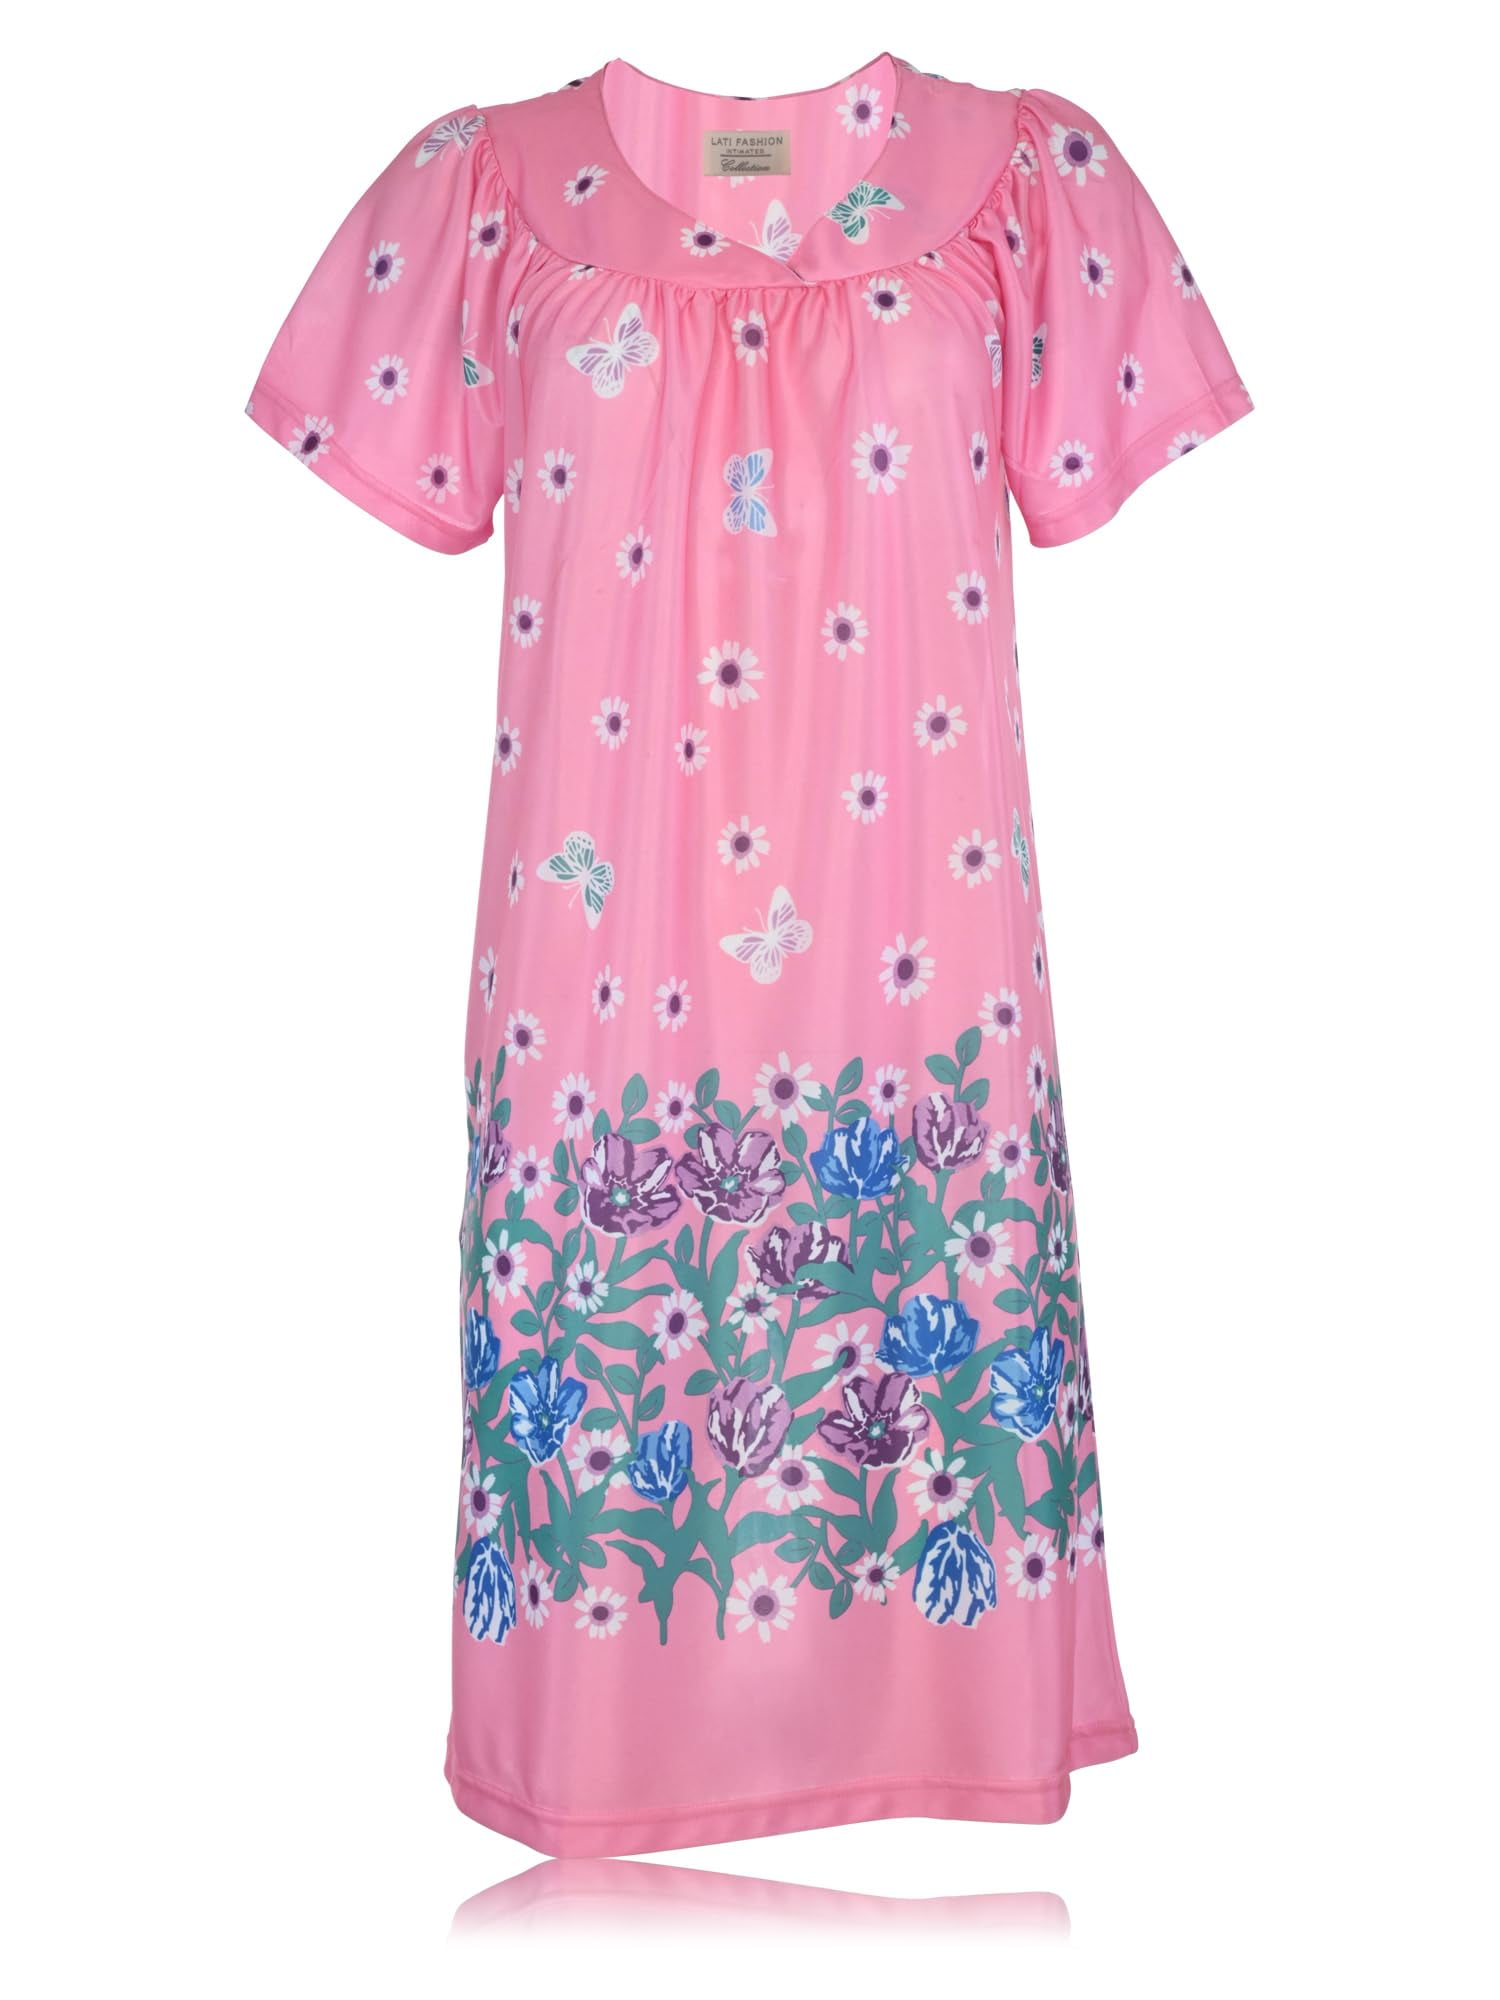 JEFFRICO Womens Nightgowns Muumuu Lounger House Dress Sleepwear Silky ...